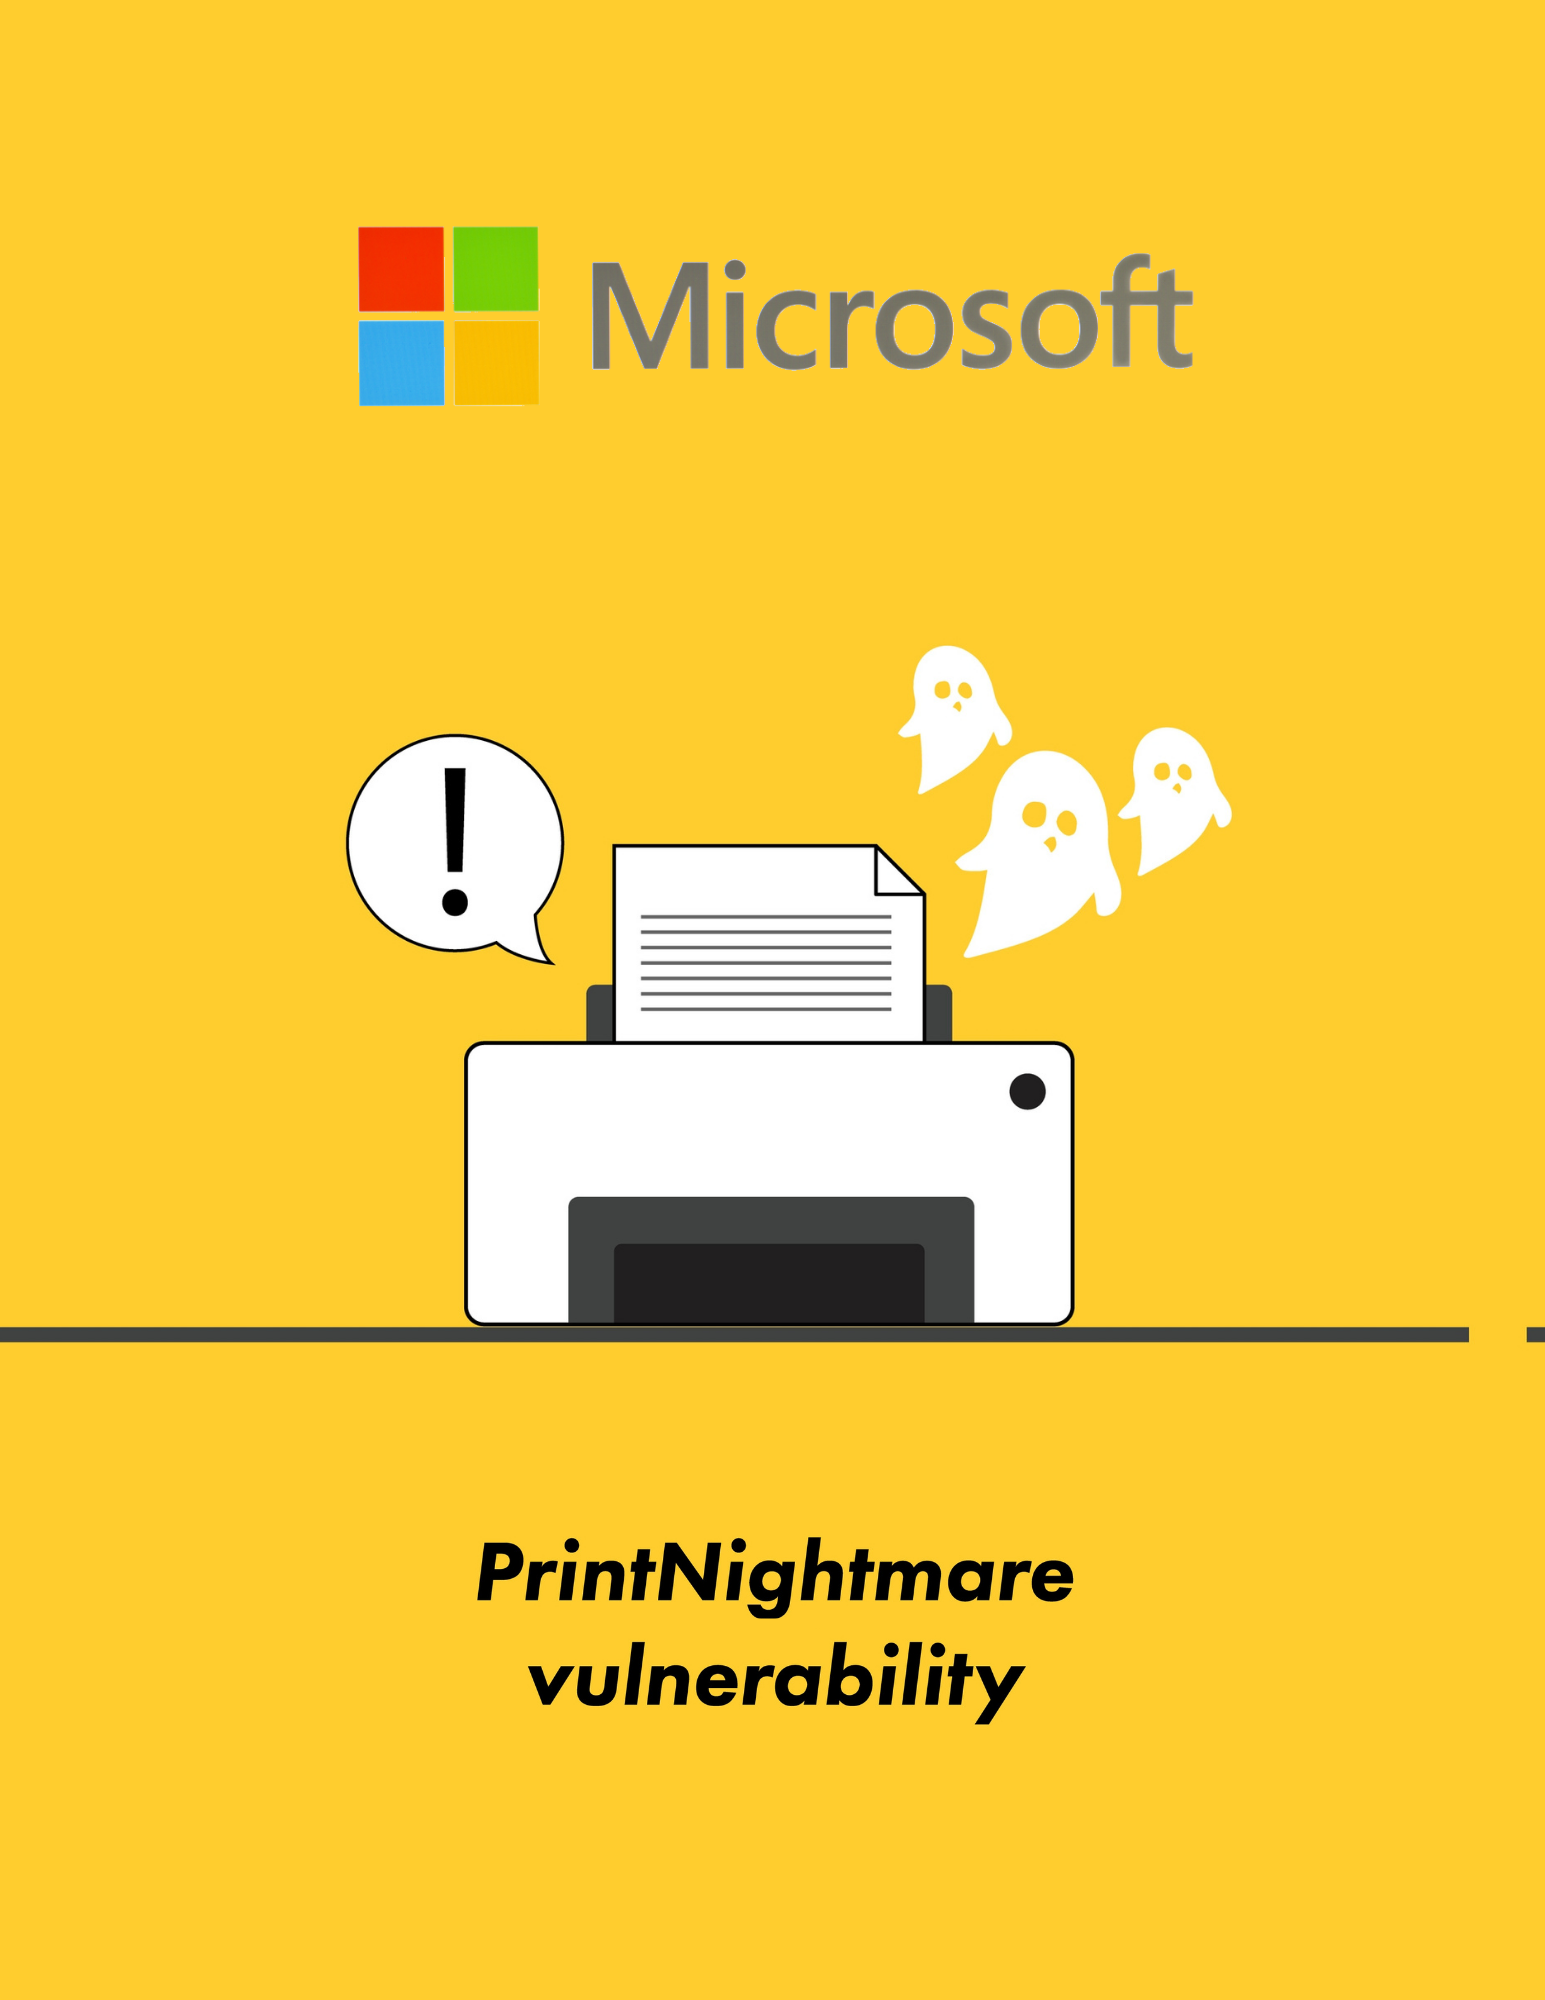 Microsoft print nightmare vulnerability